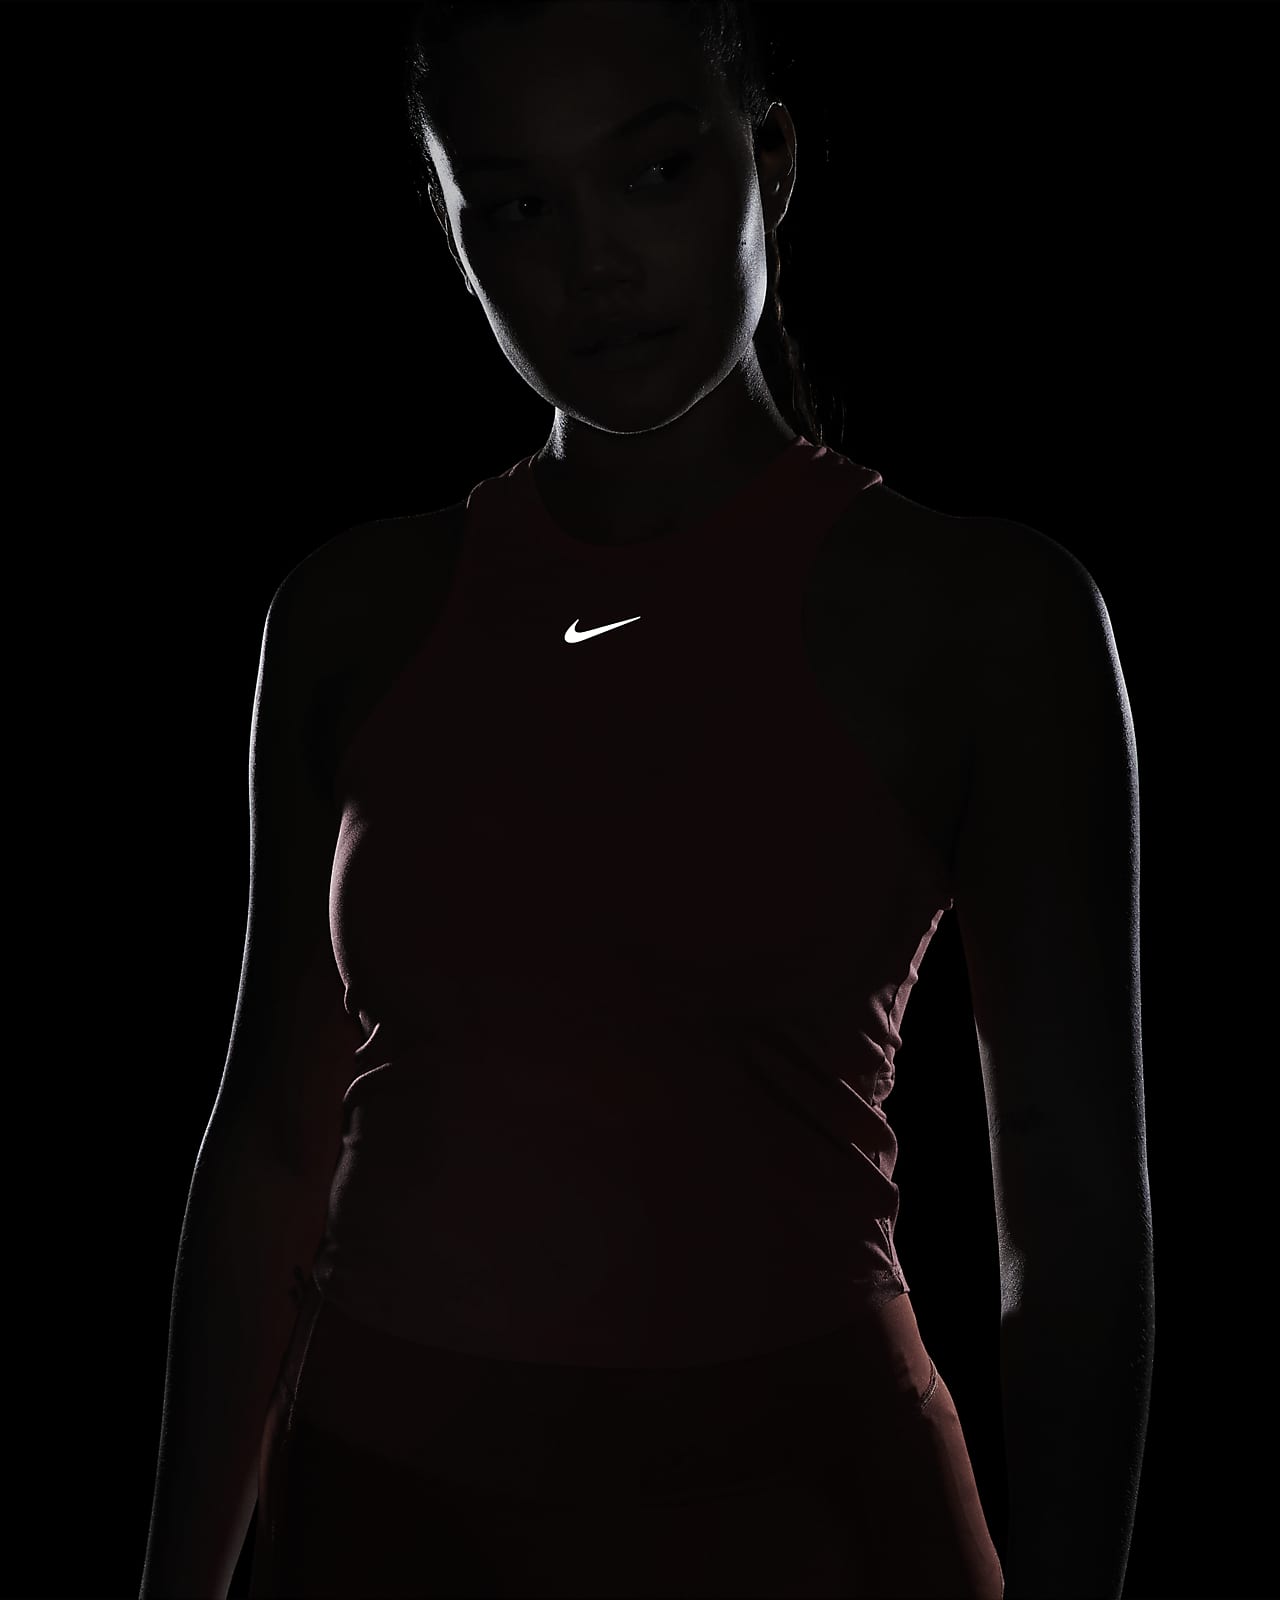 Buy Nike Dri-Fit One Luxe STD Tank Top Women Lilac online